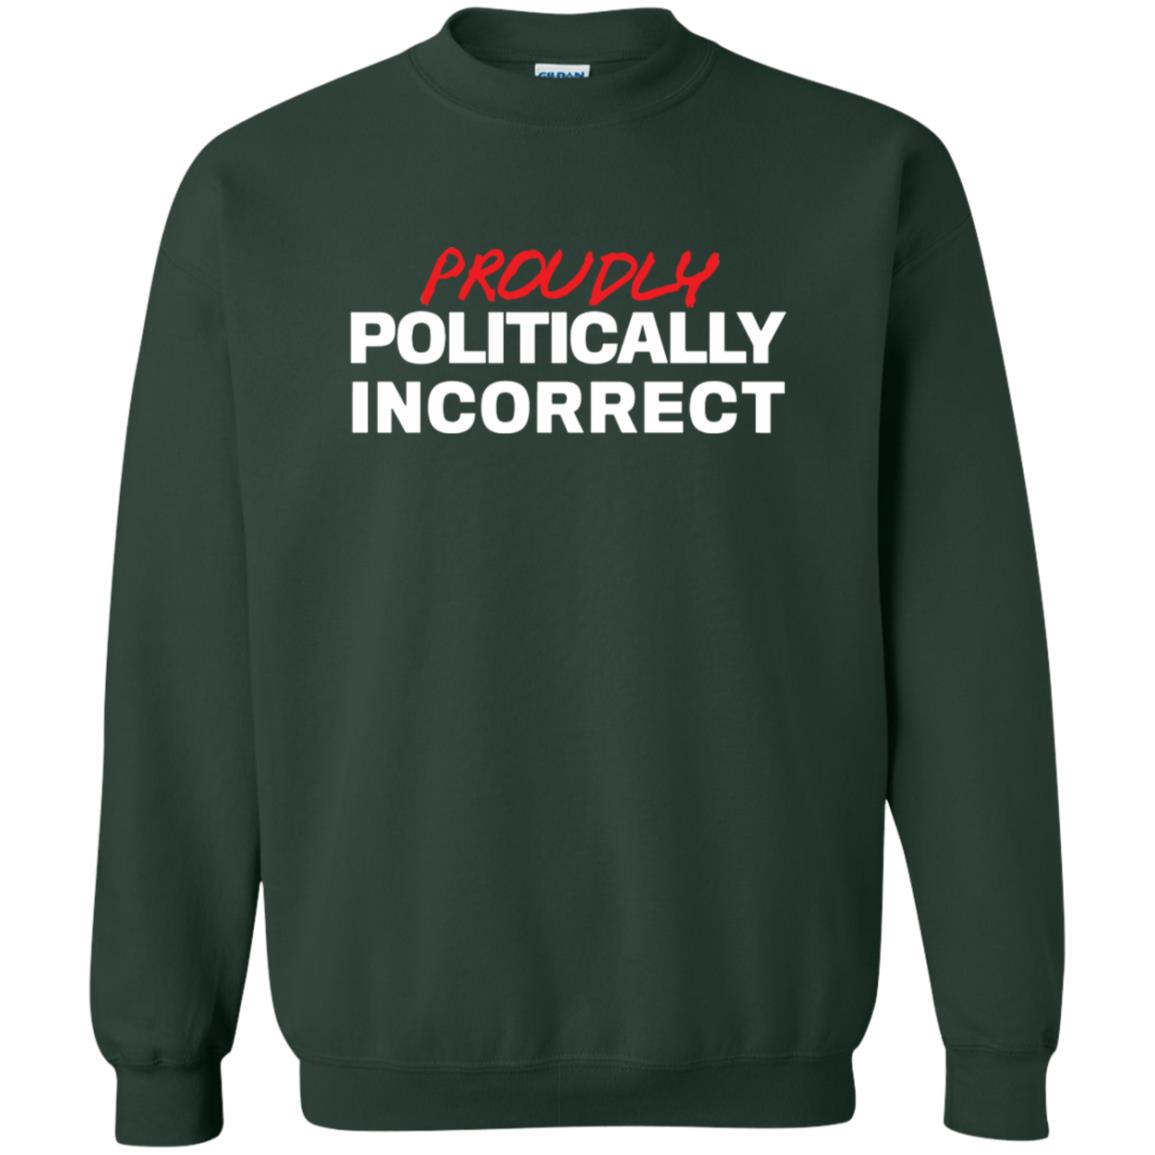 Politically Incorrect Shirt - 10% Off - FavorMerch